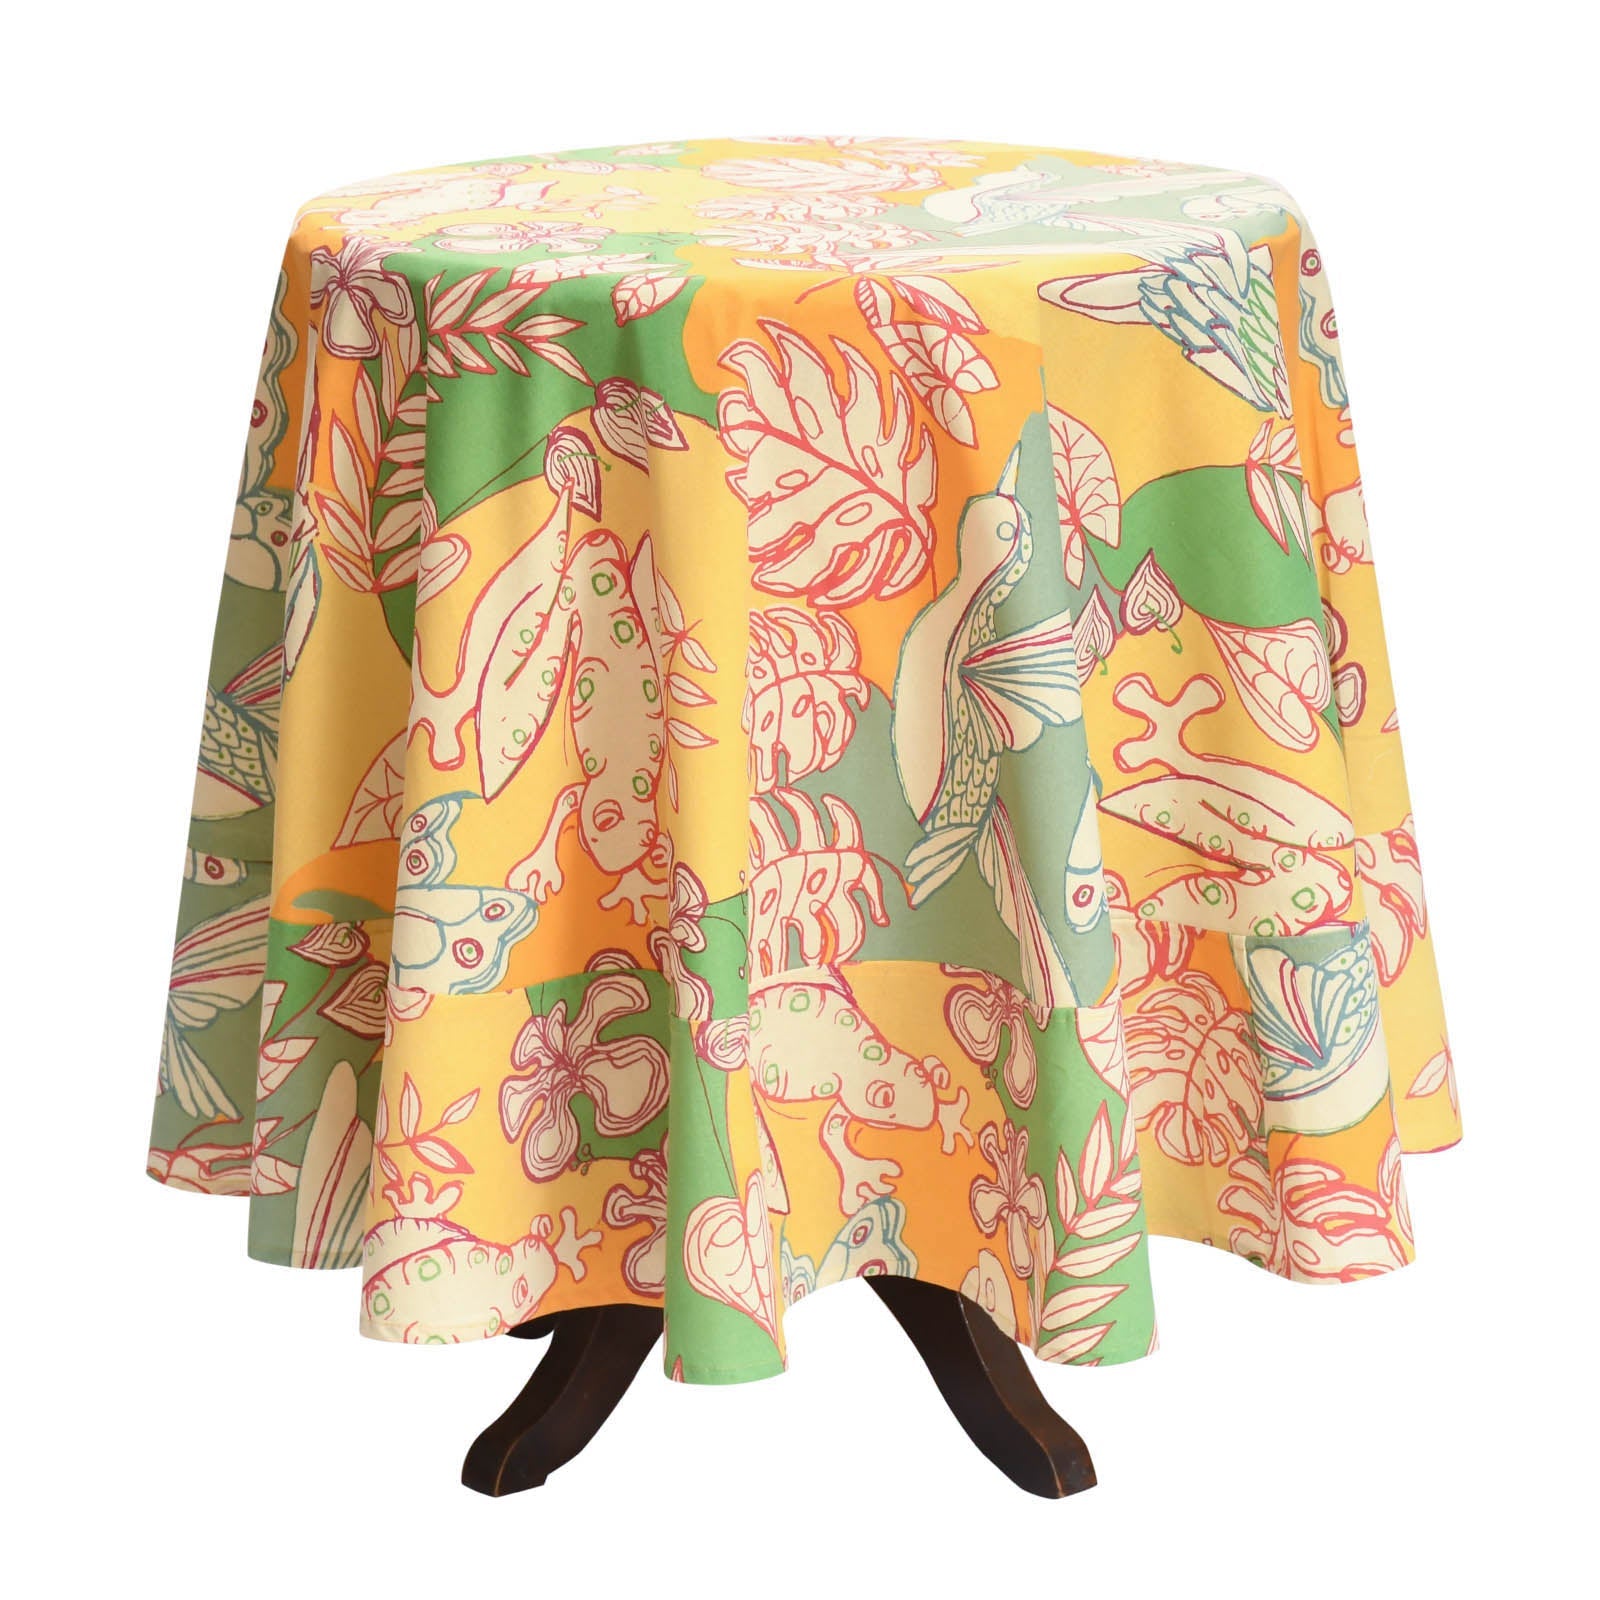 Round Table Cloth - Rain Forest Saffron